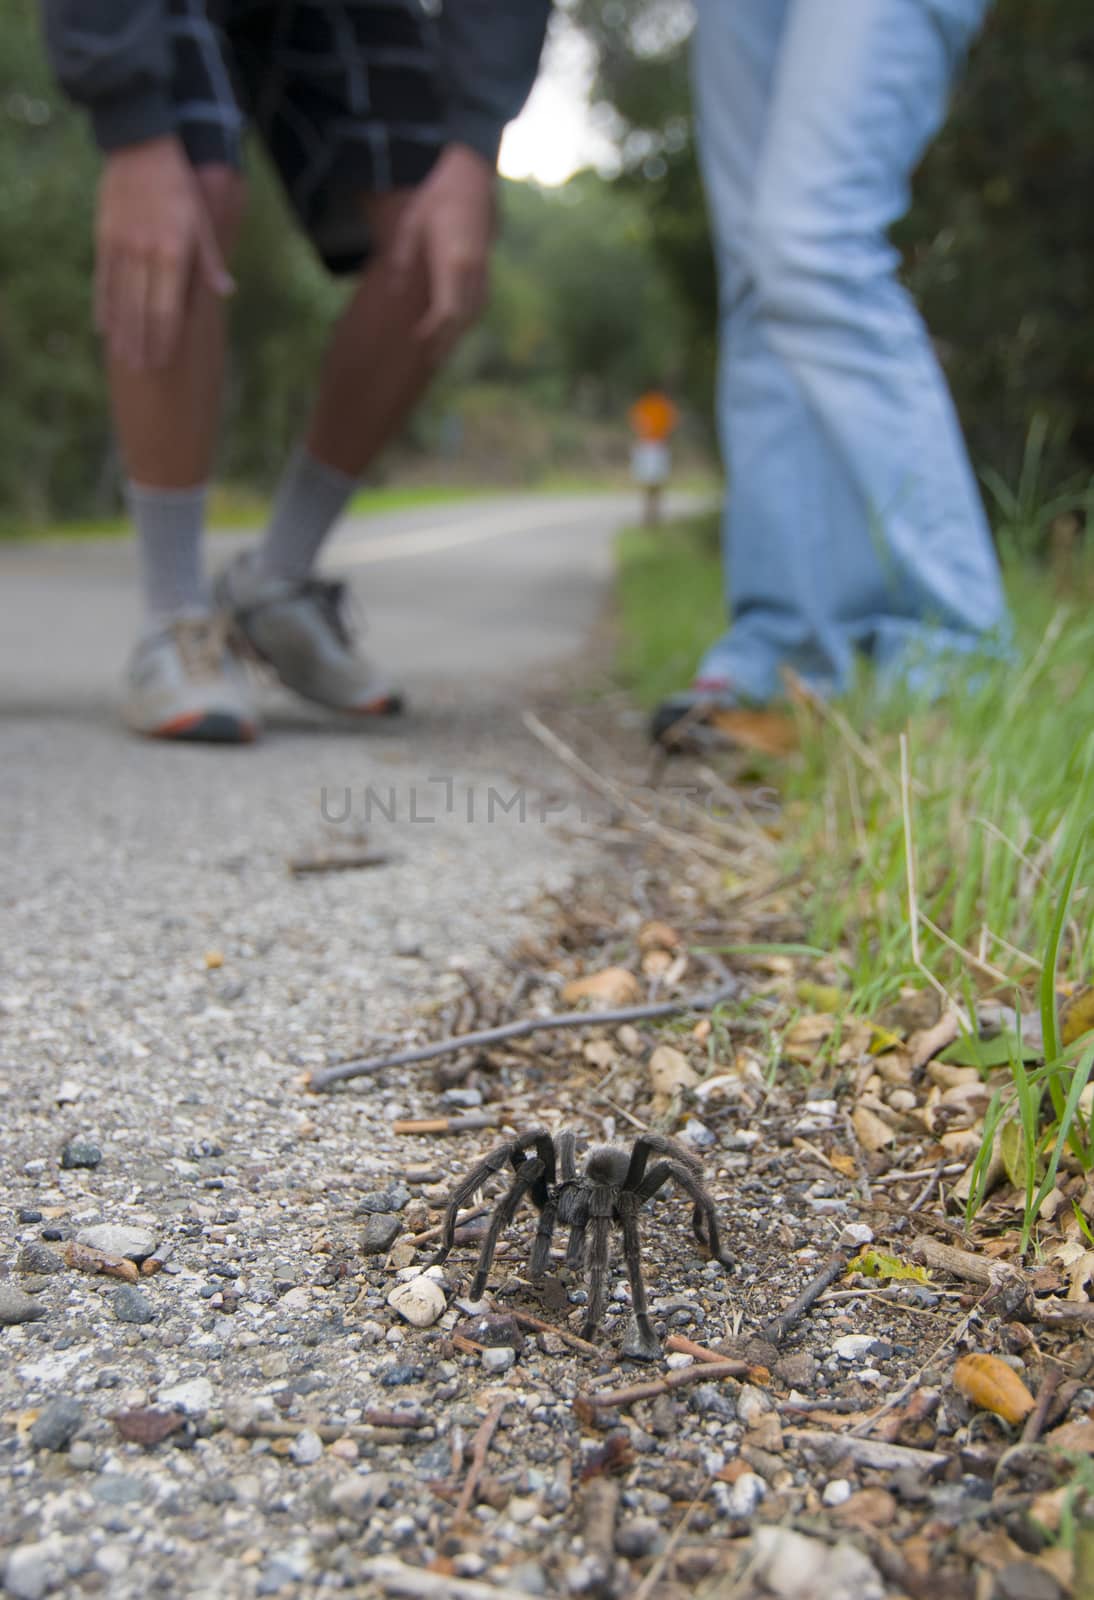 People looking at a wild tarantula seen on roadside in Californi by Njean